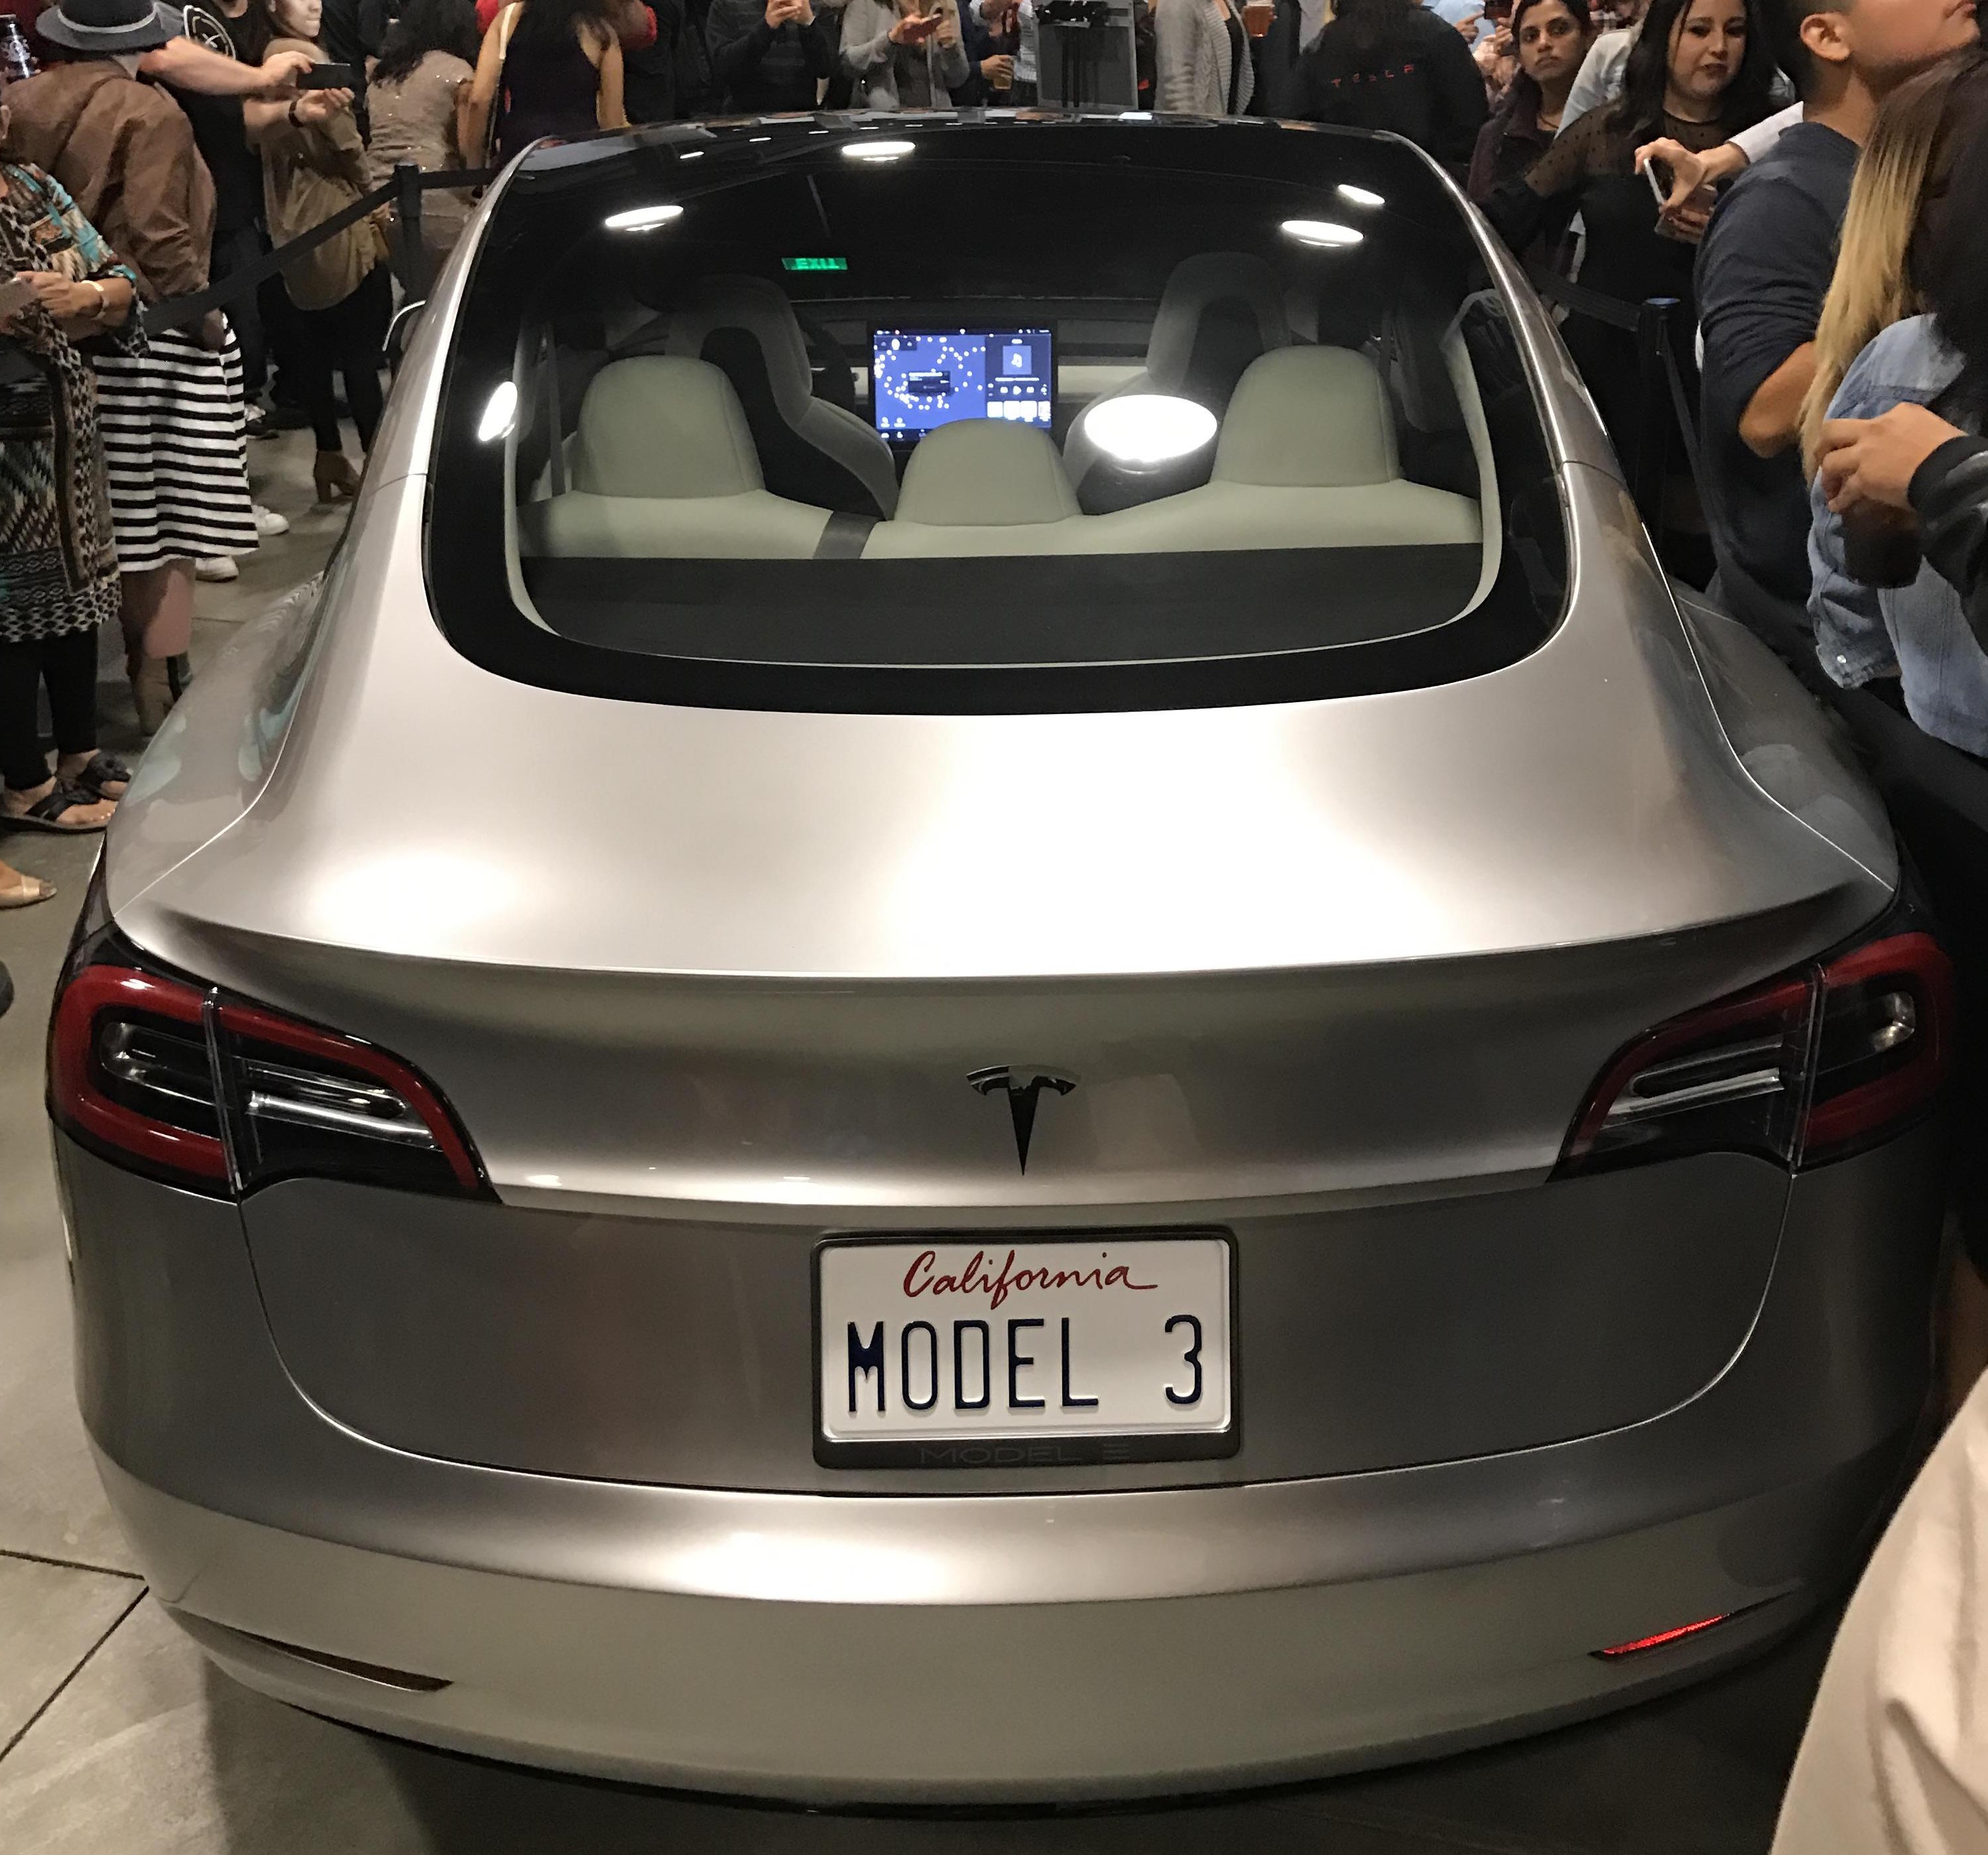 Silver Tesla Model 3 rear [Credit: ryaneager via imgur]